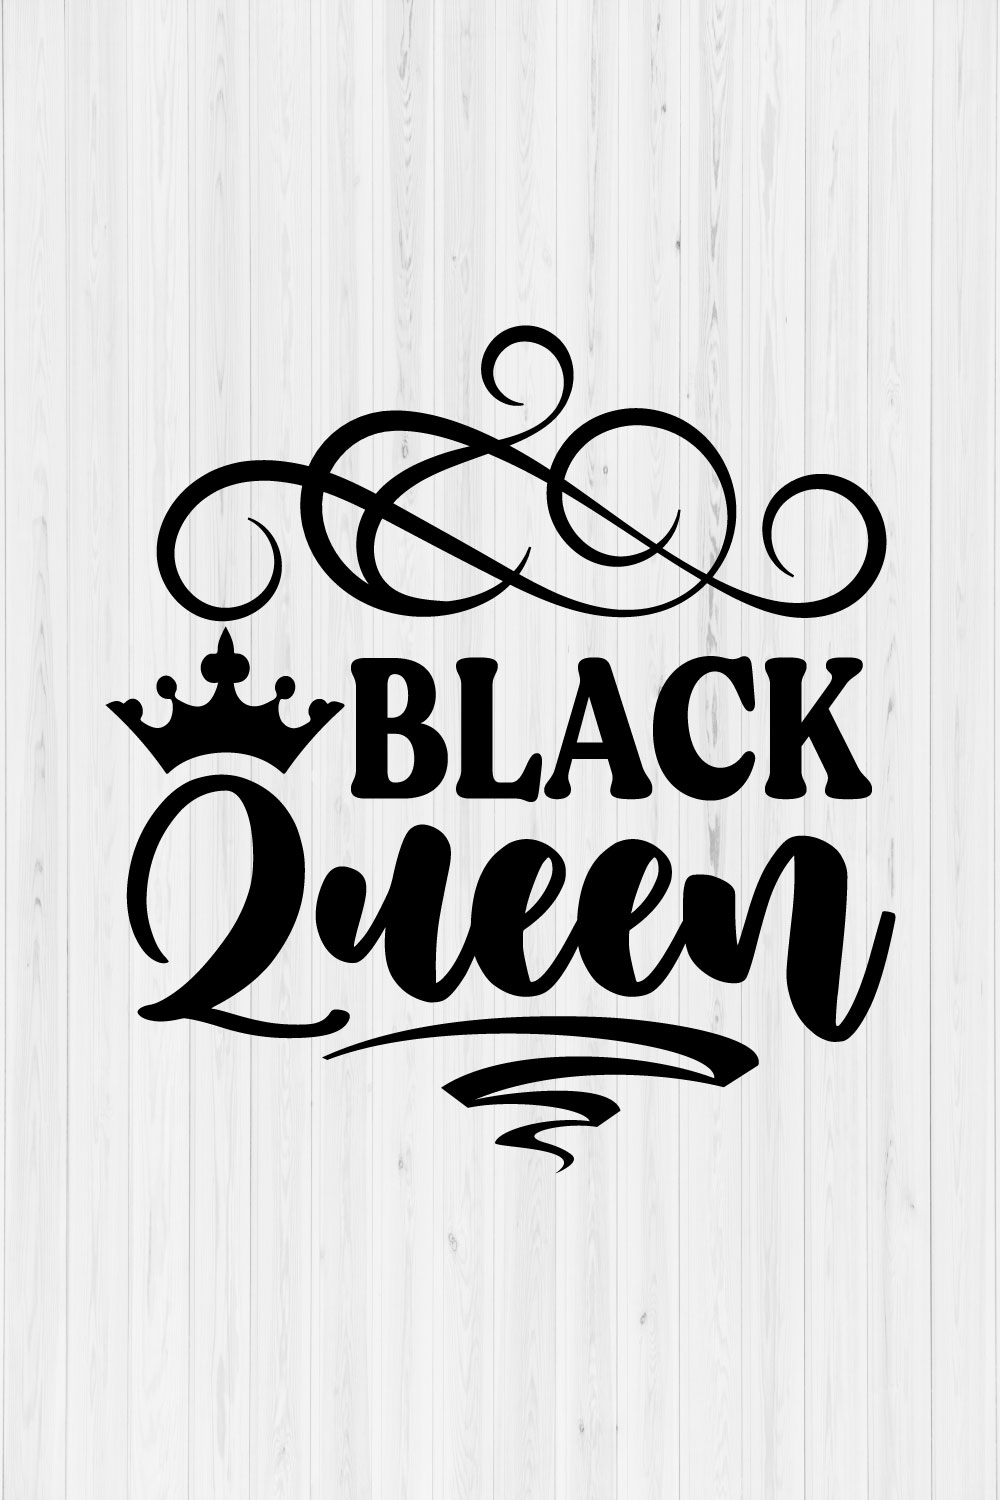 Black Queen pinterest preview image.